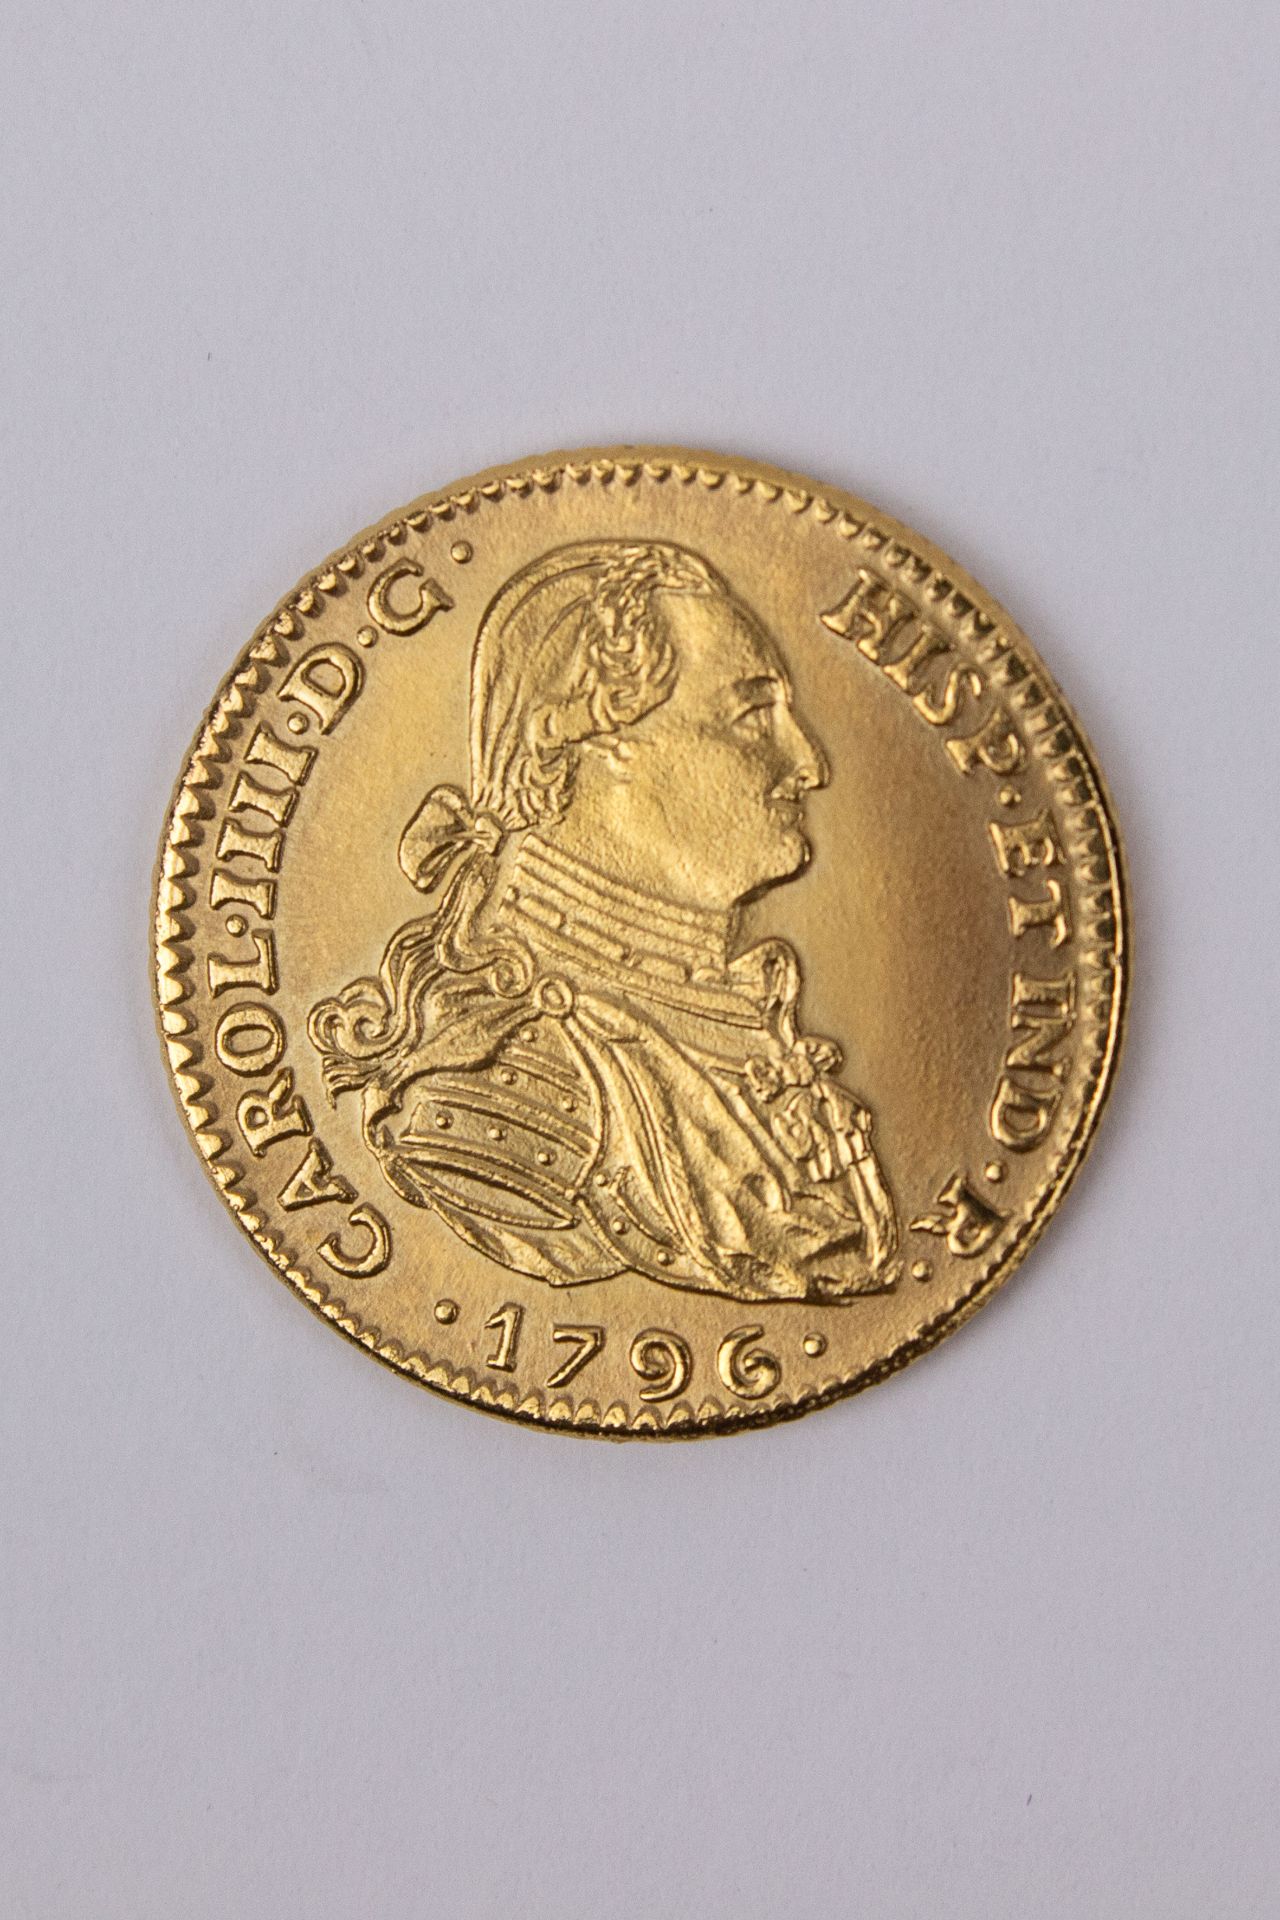 2 escudos Carlos IV, Seville mint, year 1796